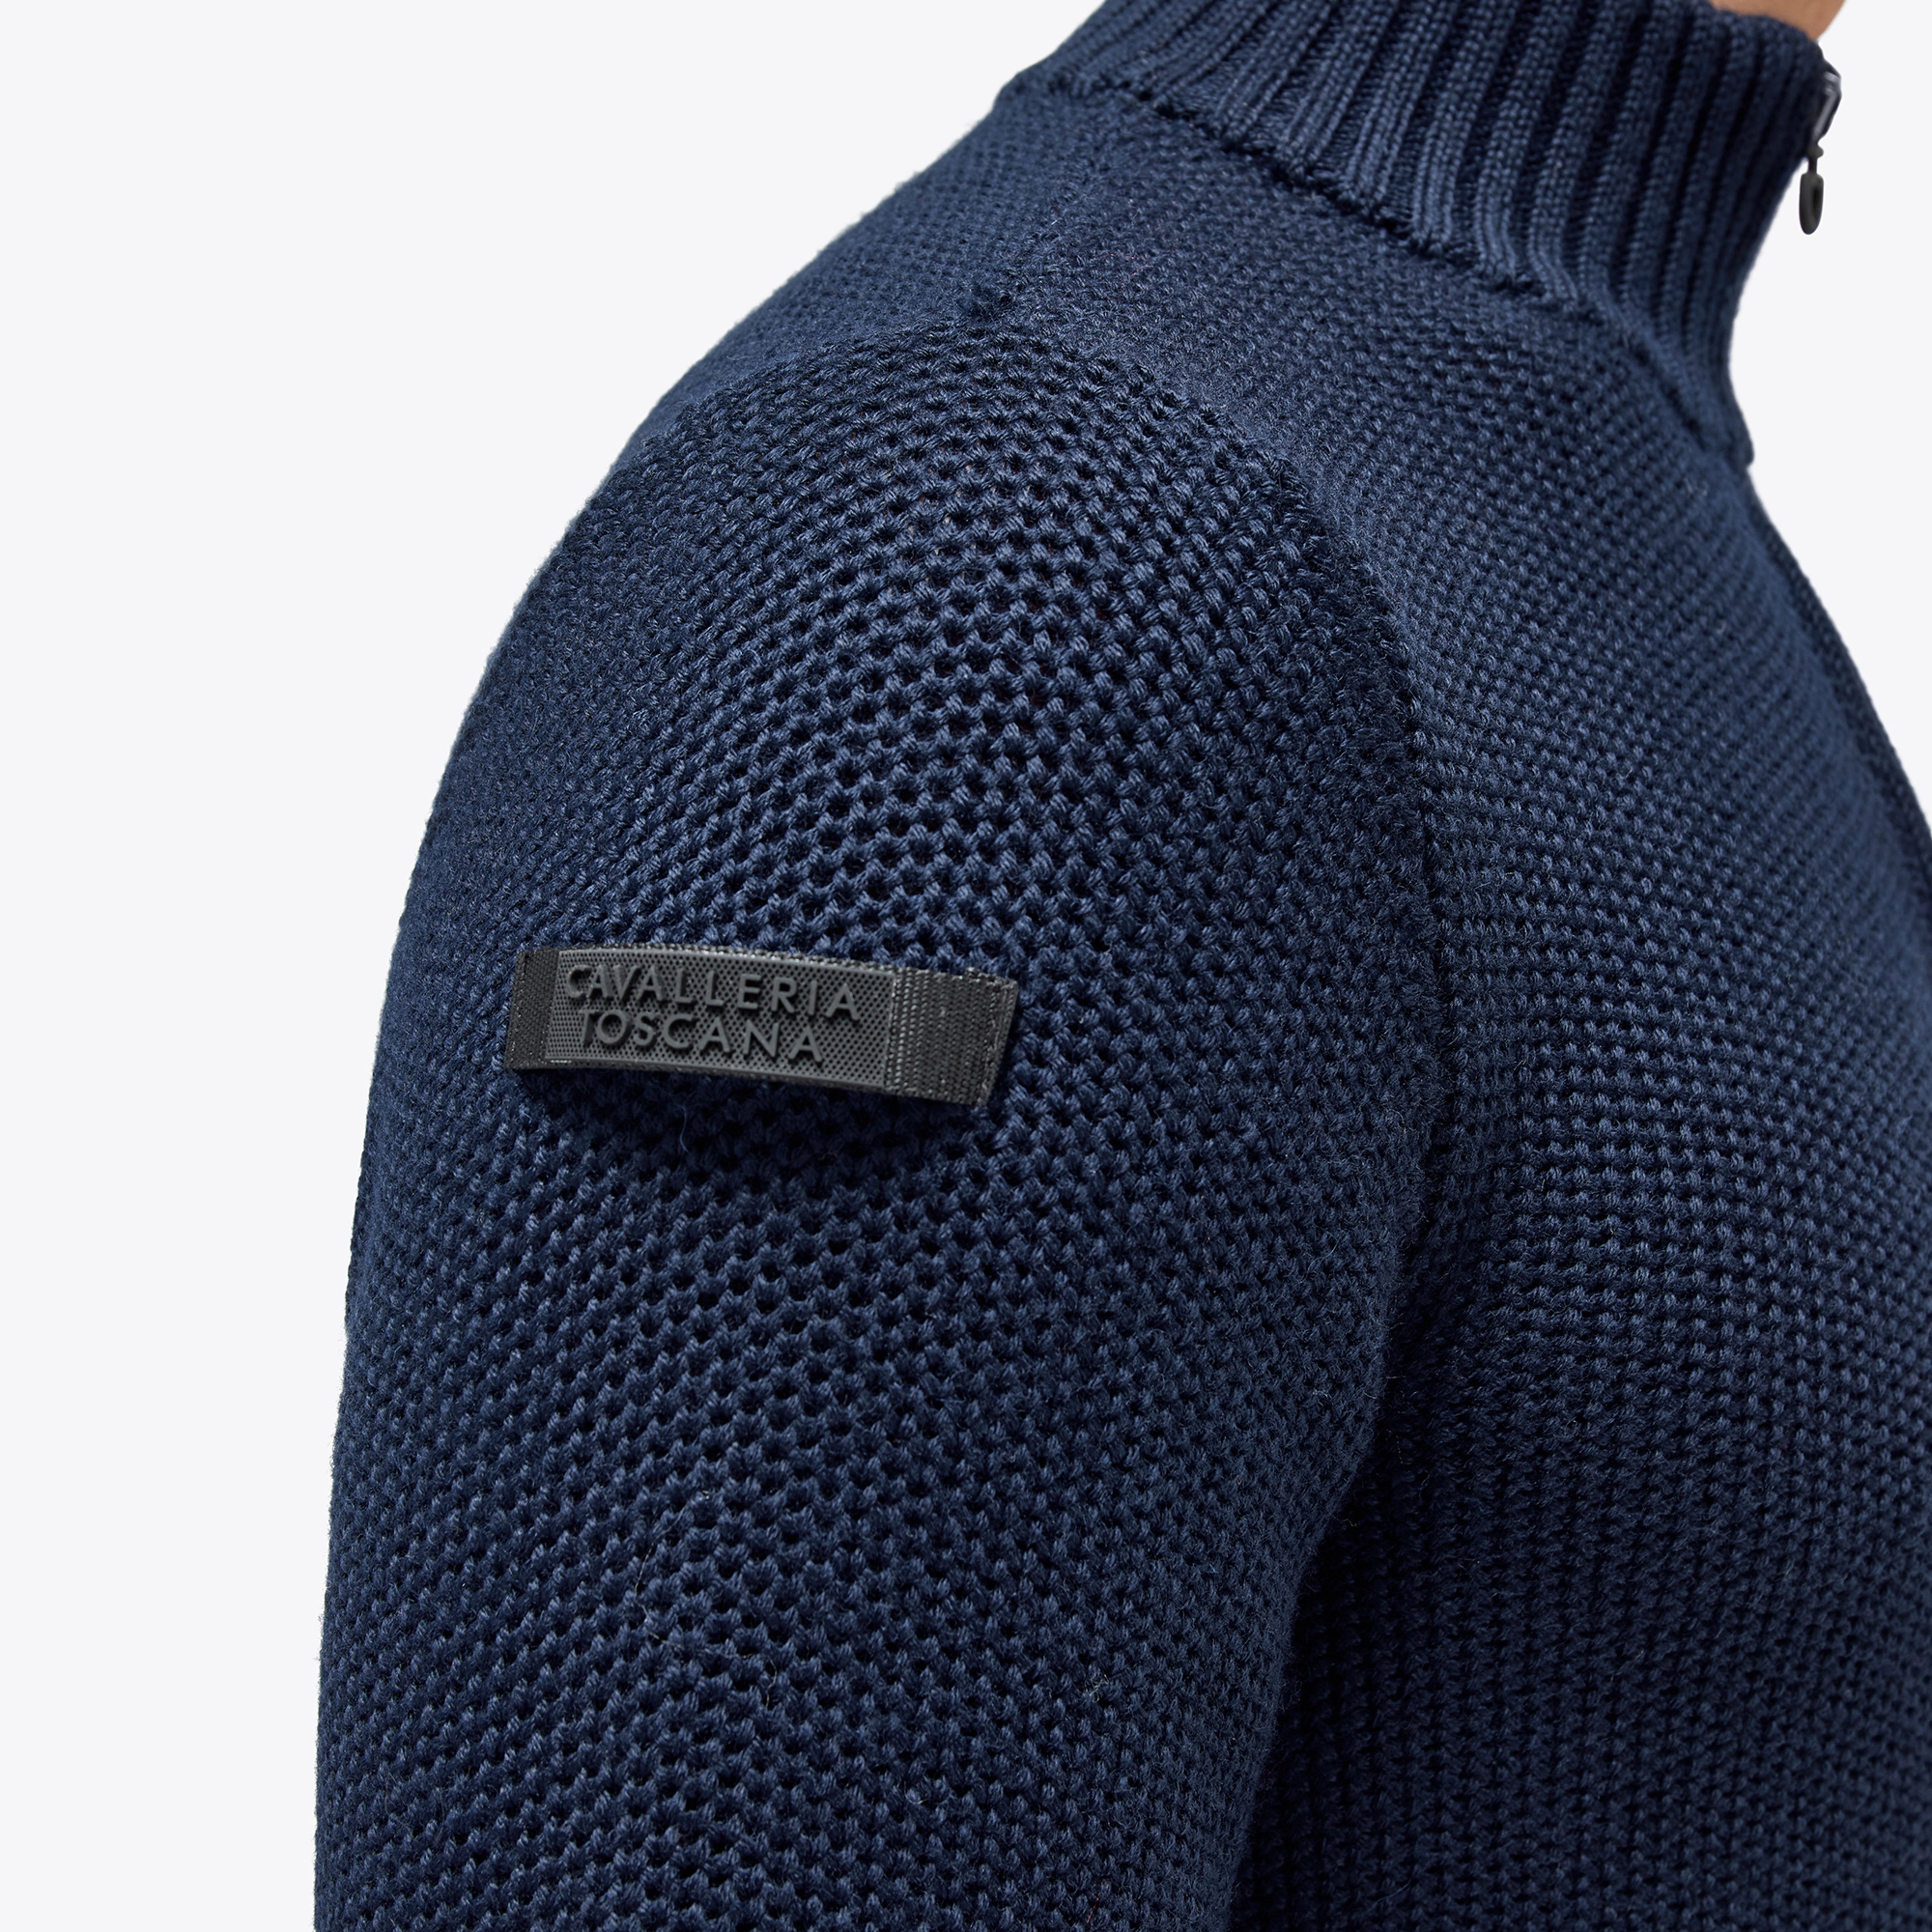 Cavalleria Toscana Knit Zip Sweater mens